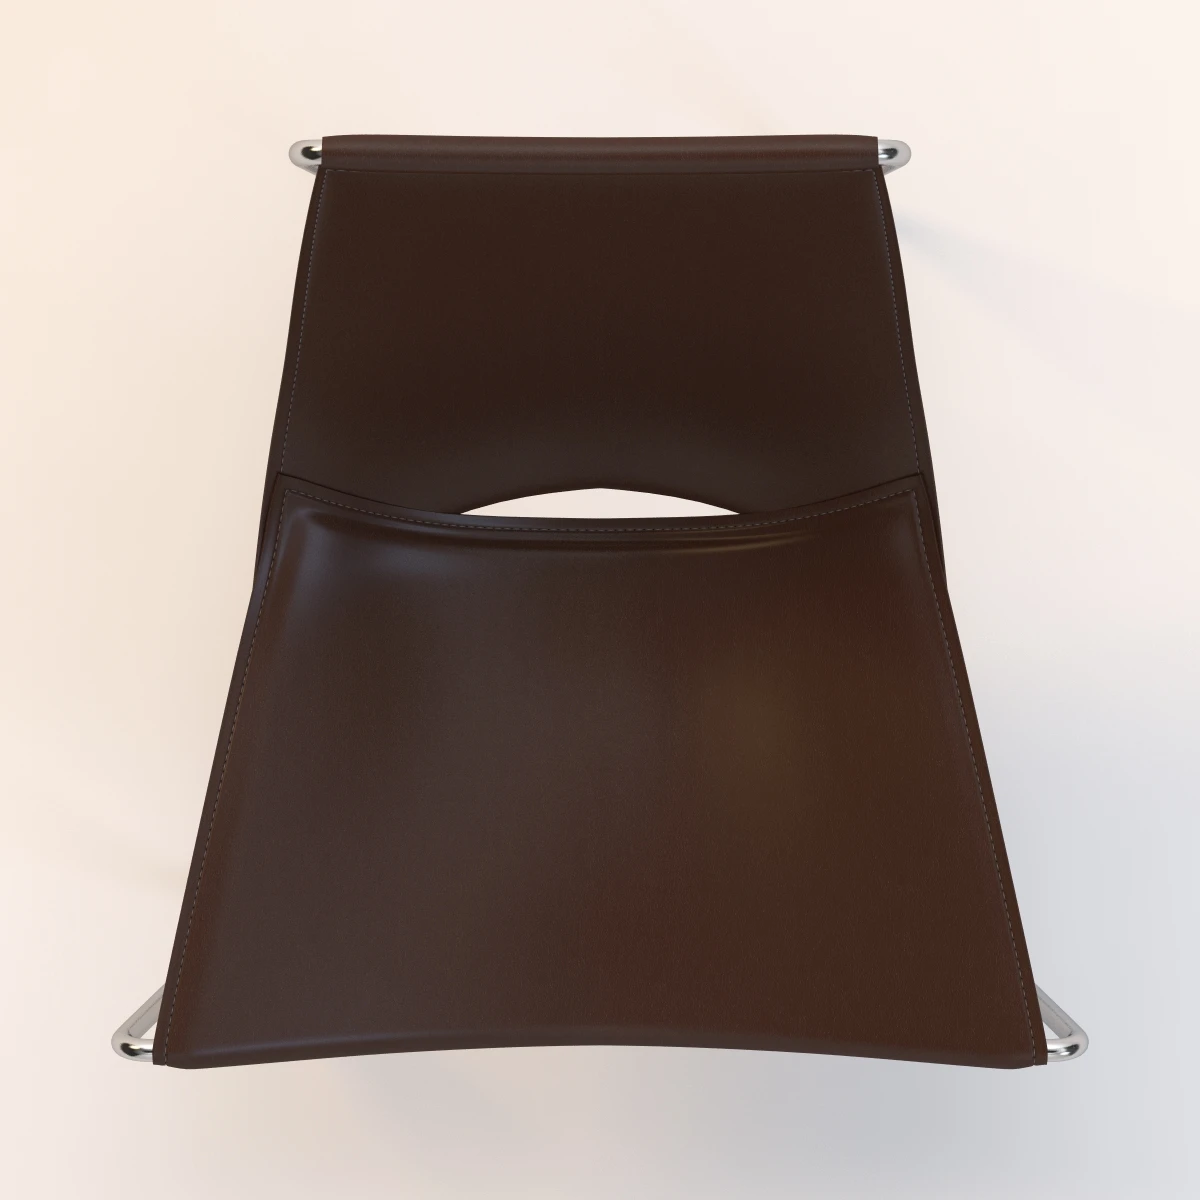 Valitalia Apelle Chair 3D Model_07